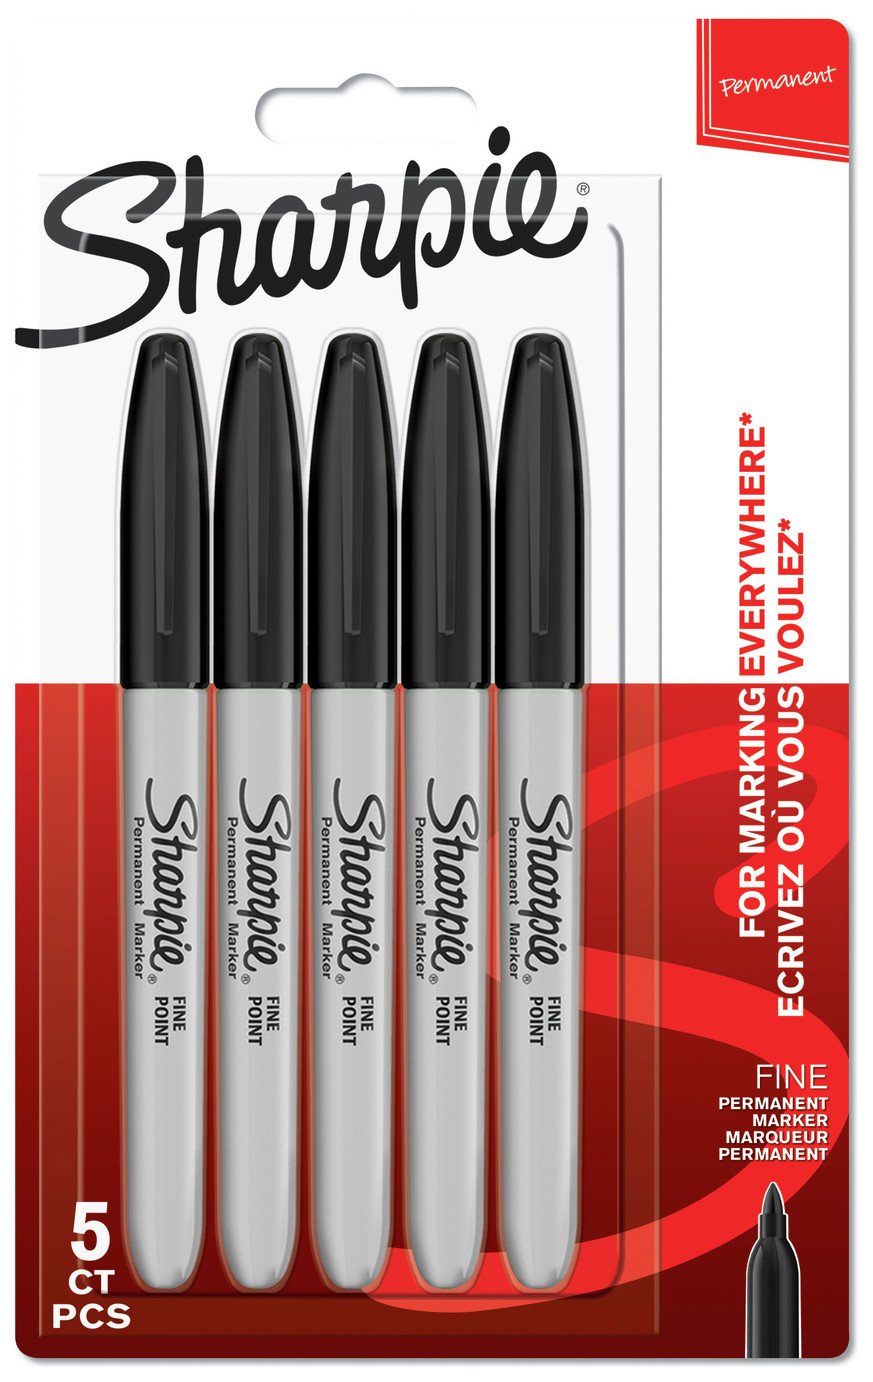 Sharpie Fine Tip Black Permanent Markers - 5 Pack